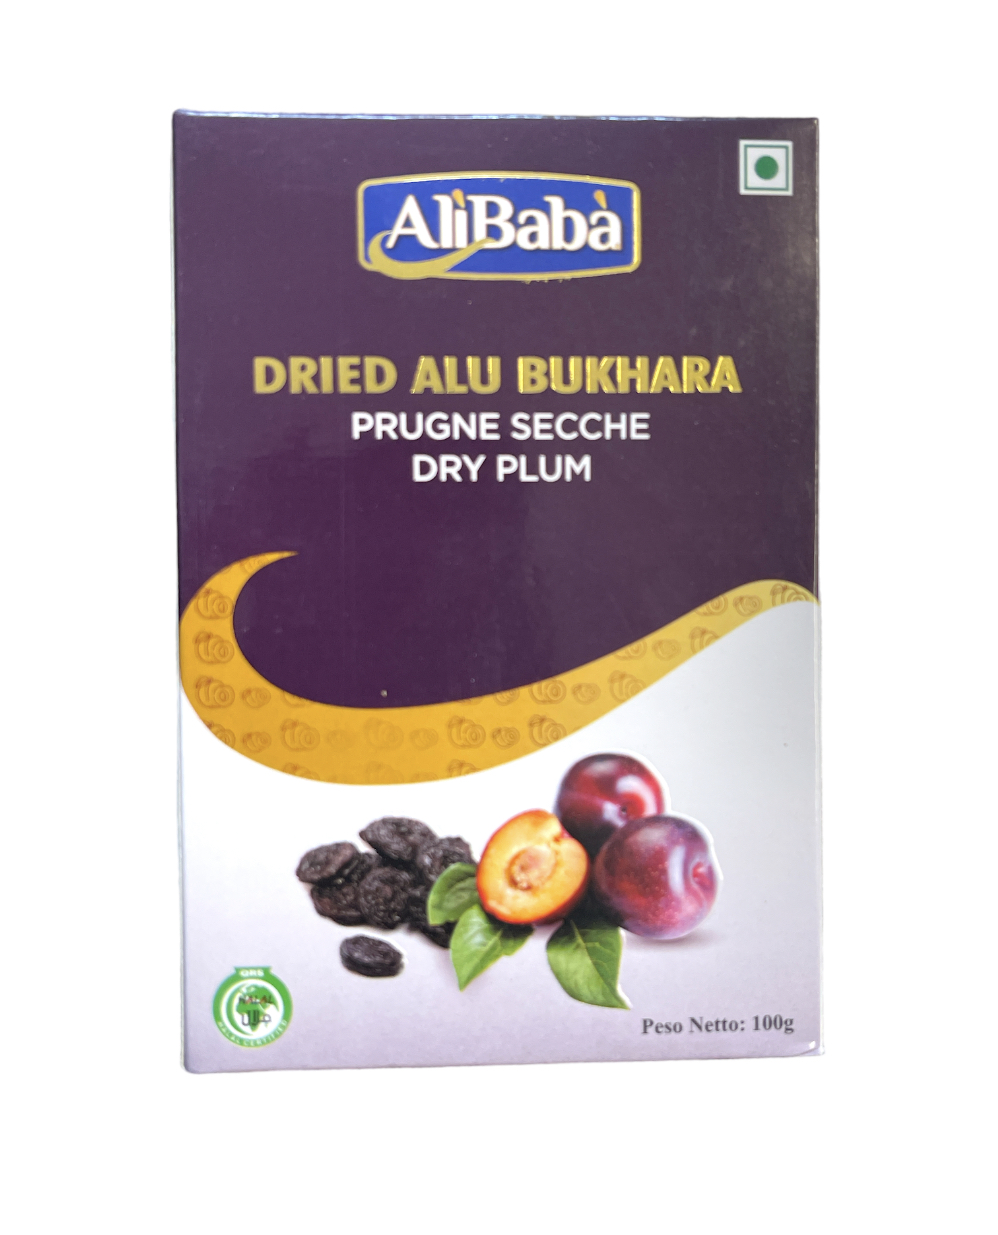 Ali Baba Aloo Bukhara (Dried Plums) 100g